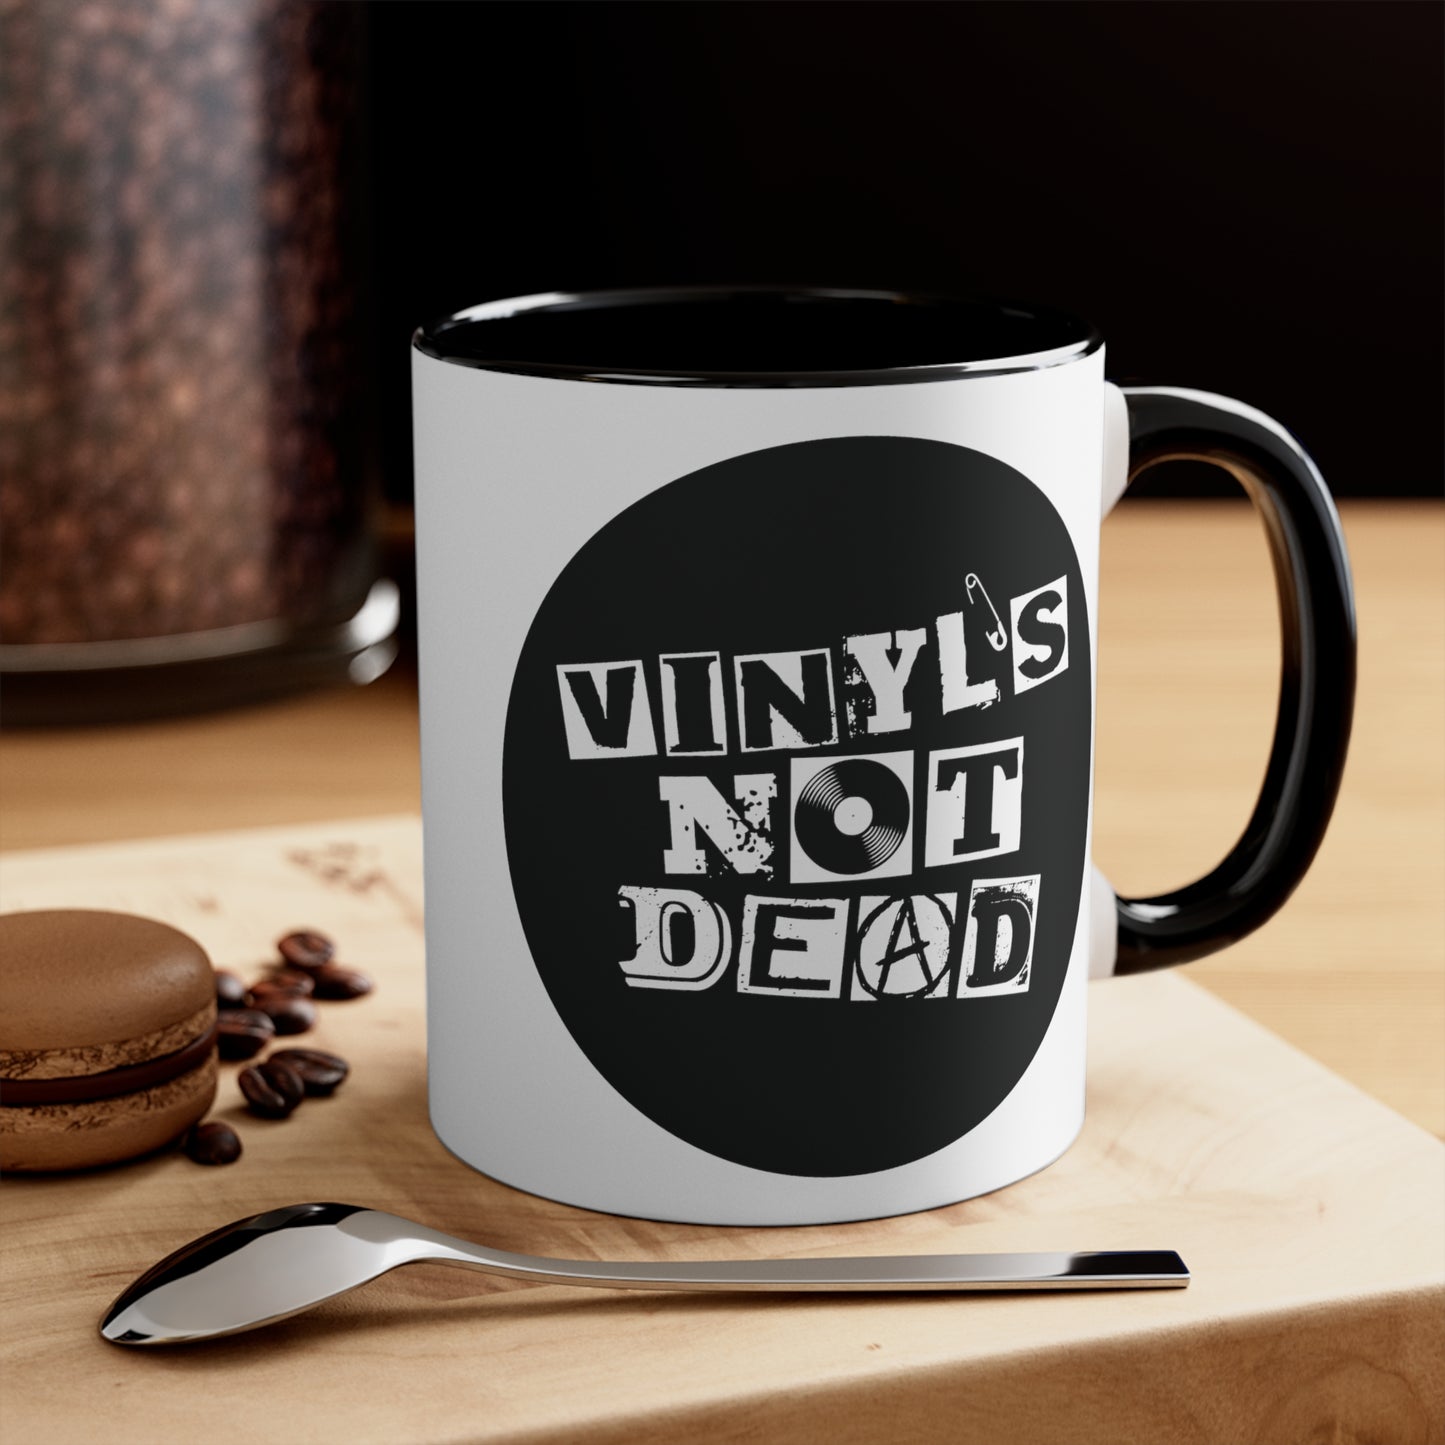 Vinyl Record Themed 11oz Accent Coffee Mug - Vinyl is Not Dead Black